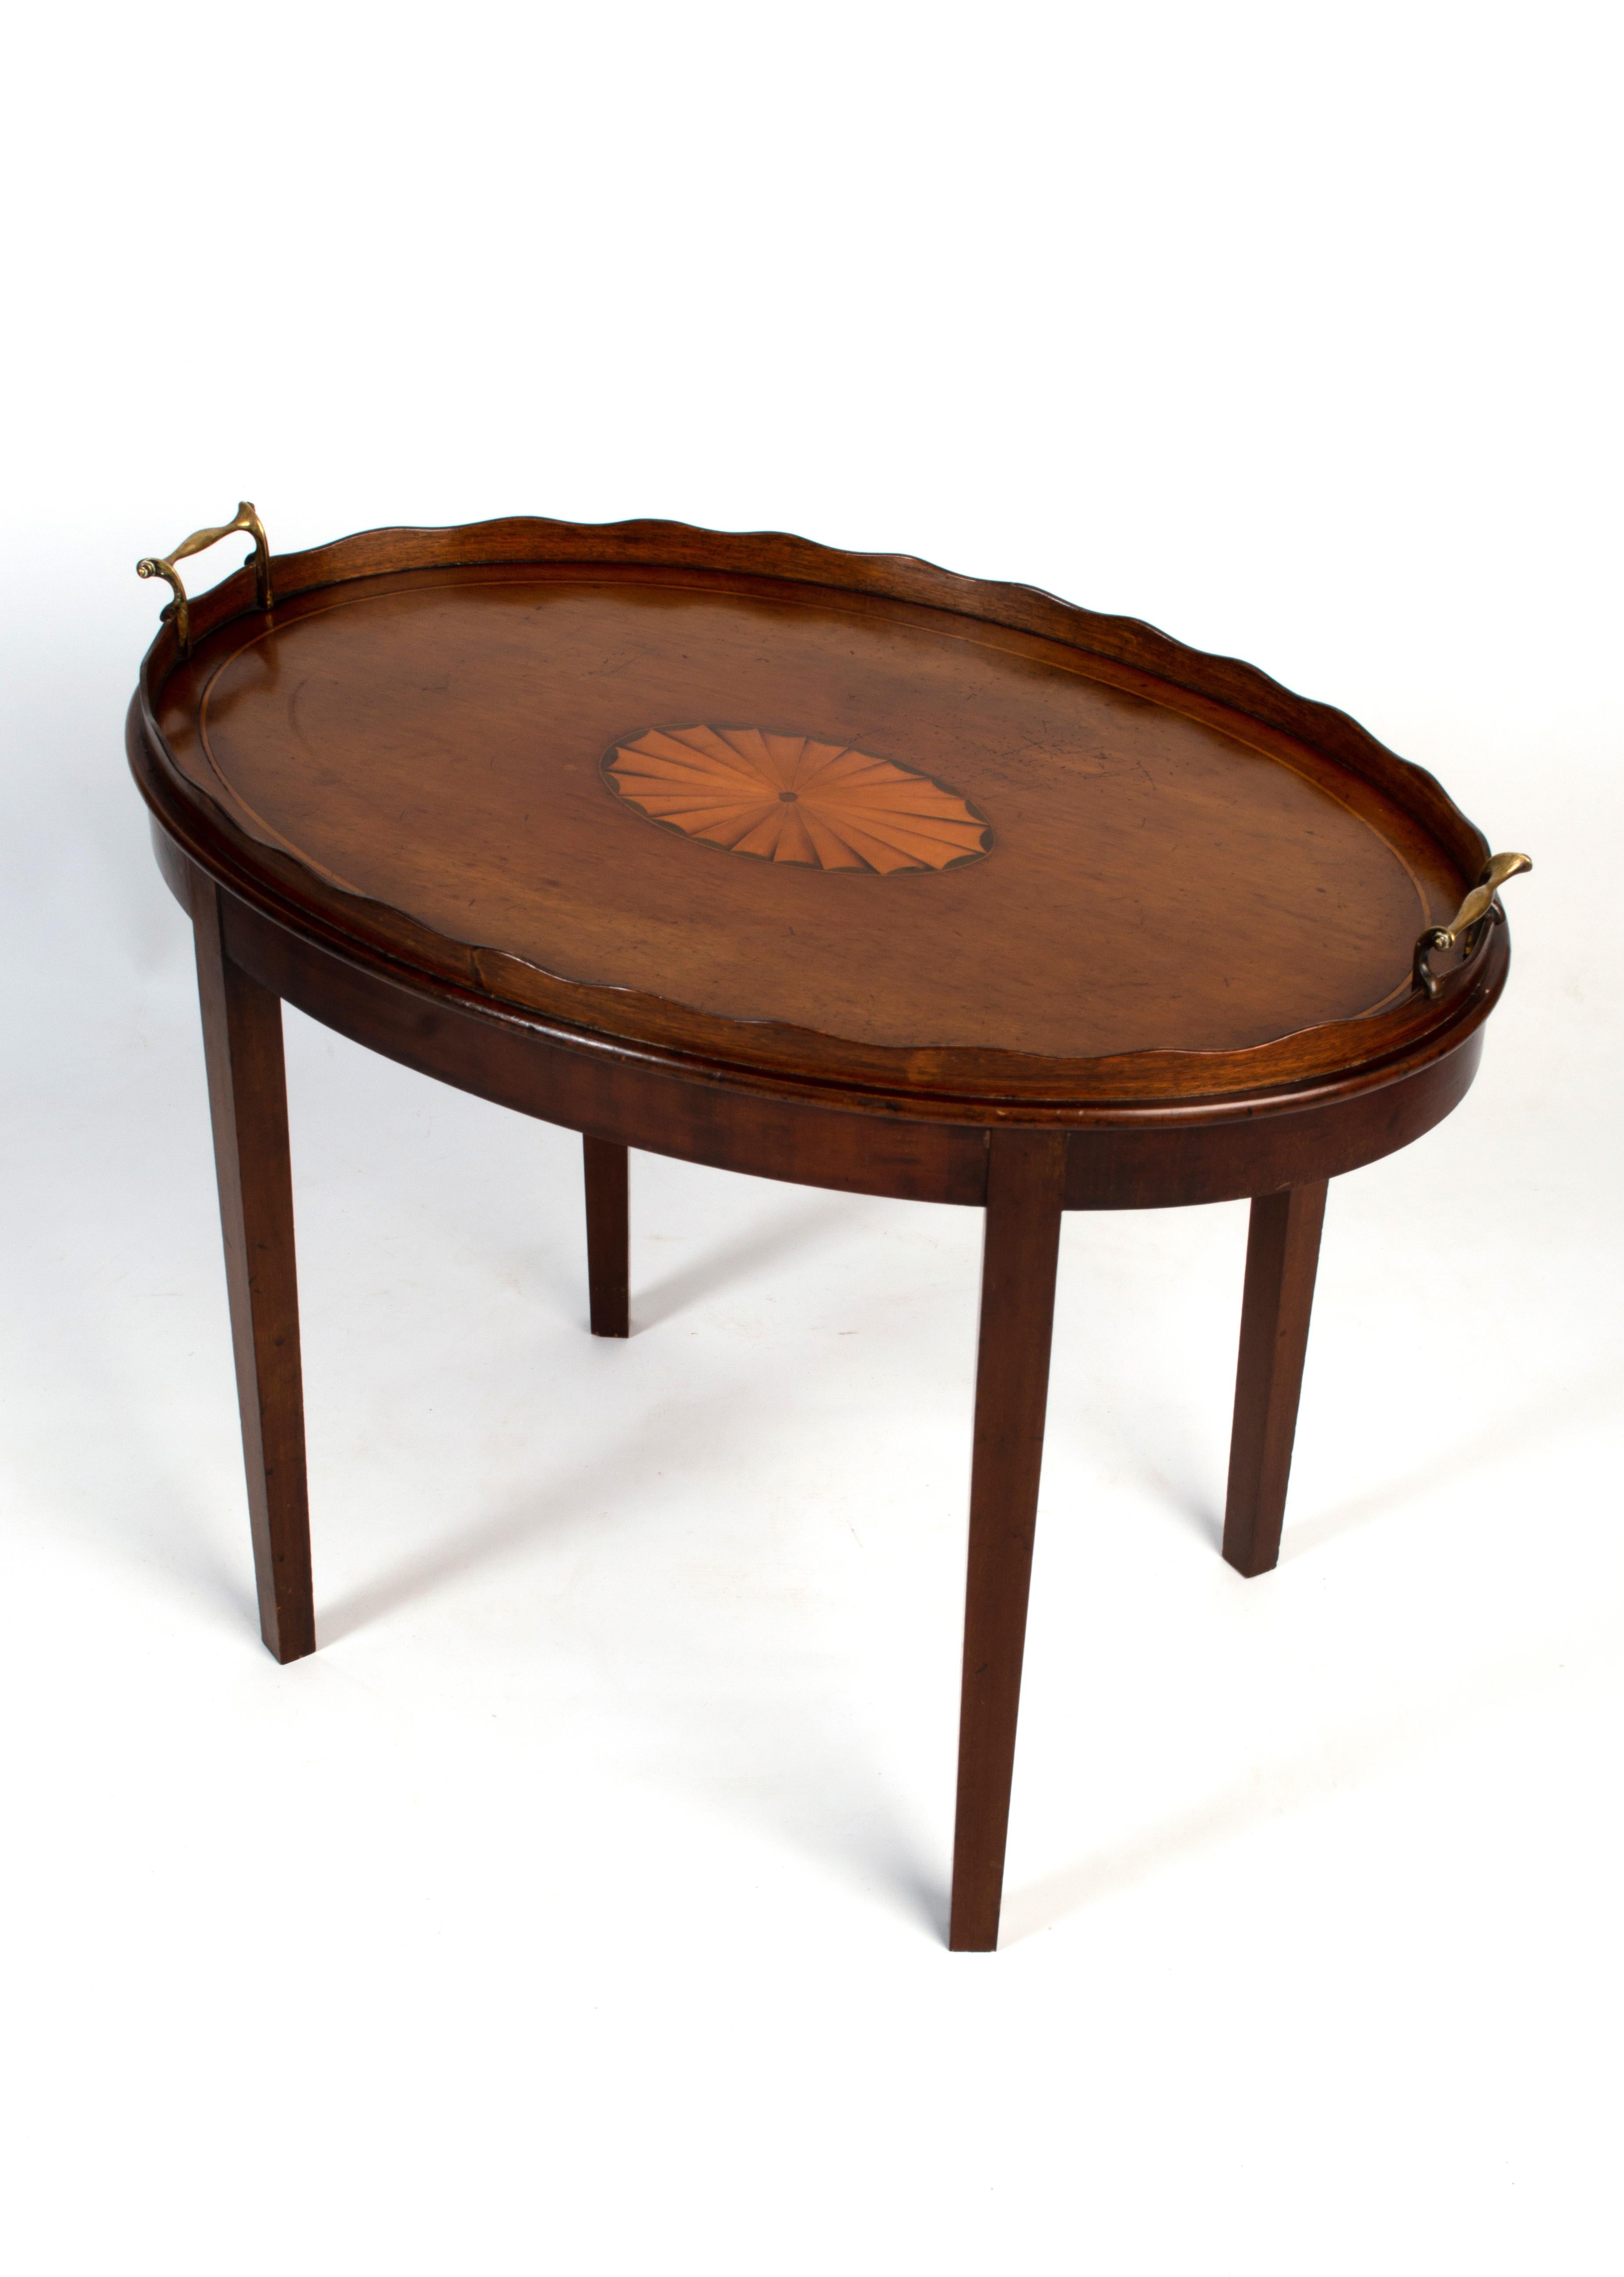 Antique English 19th Century Sheraton Revival Mahogany Tray Table For Sale 3